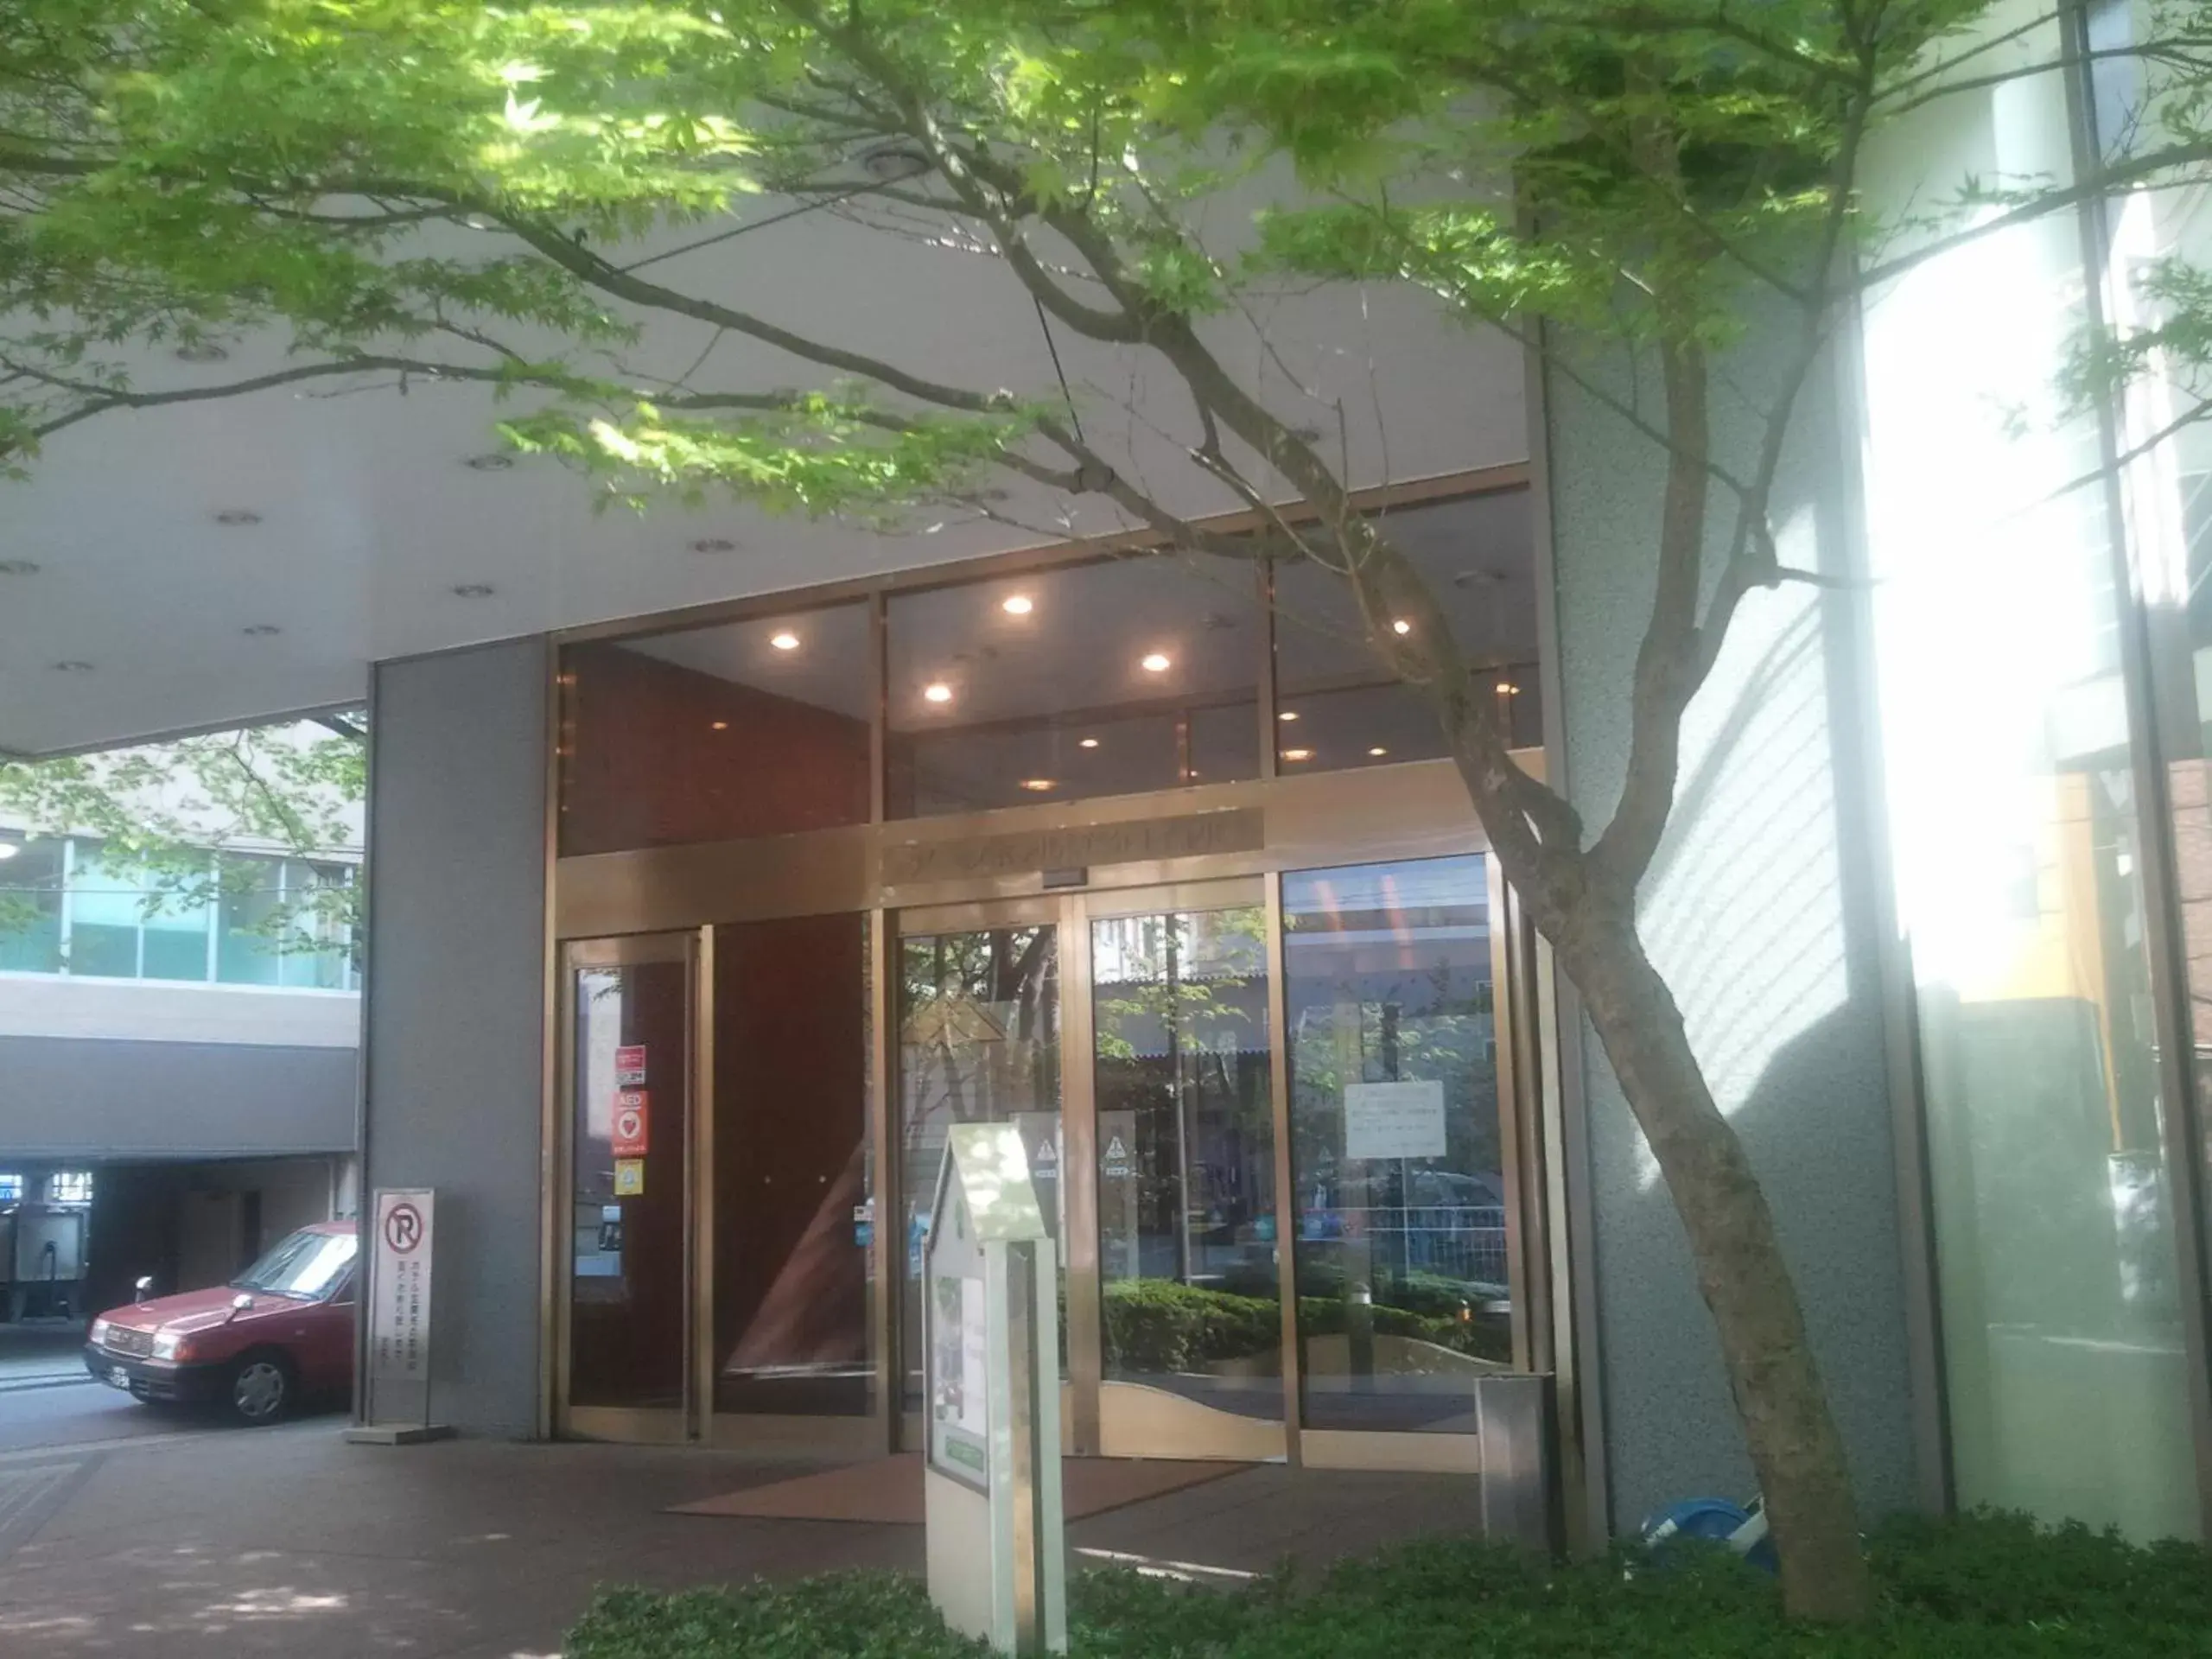 Facade/entrance in Ark Hotel Royal Fukuoka Tenjin -ROUTE INN HOTELS-